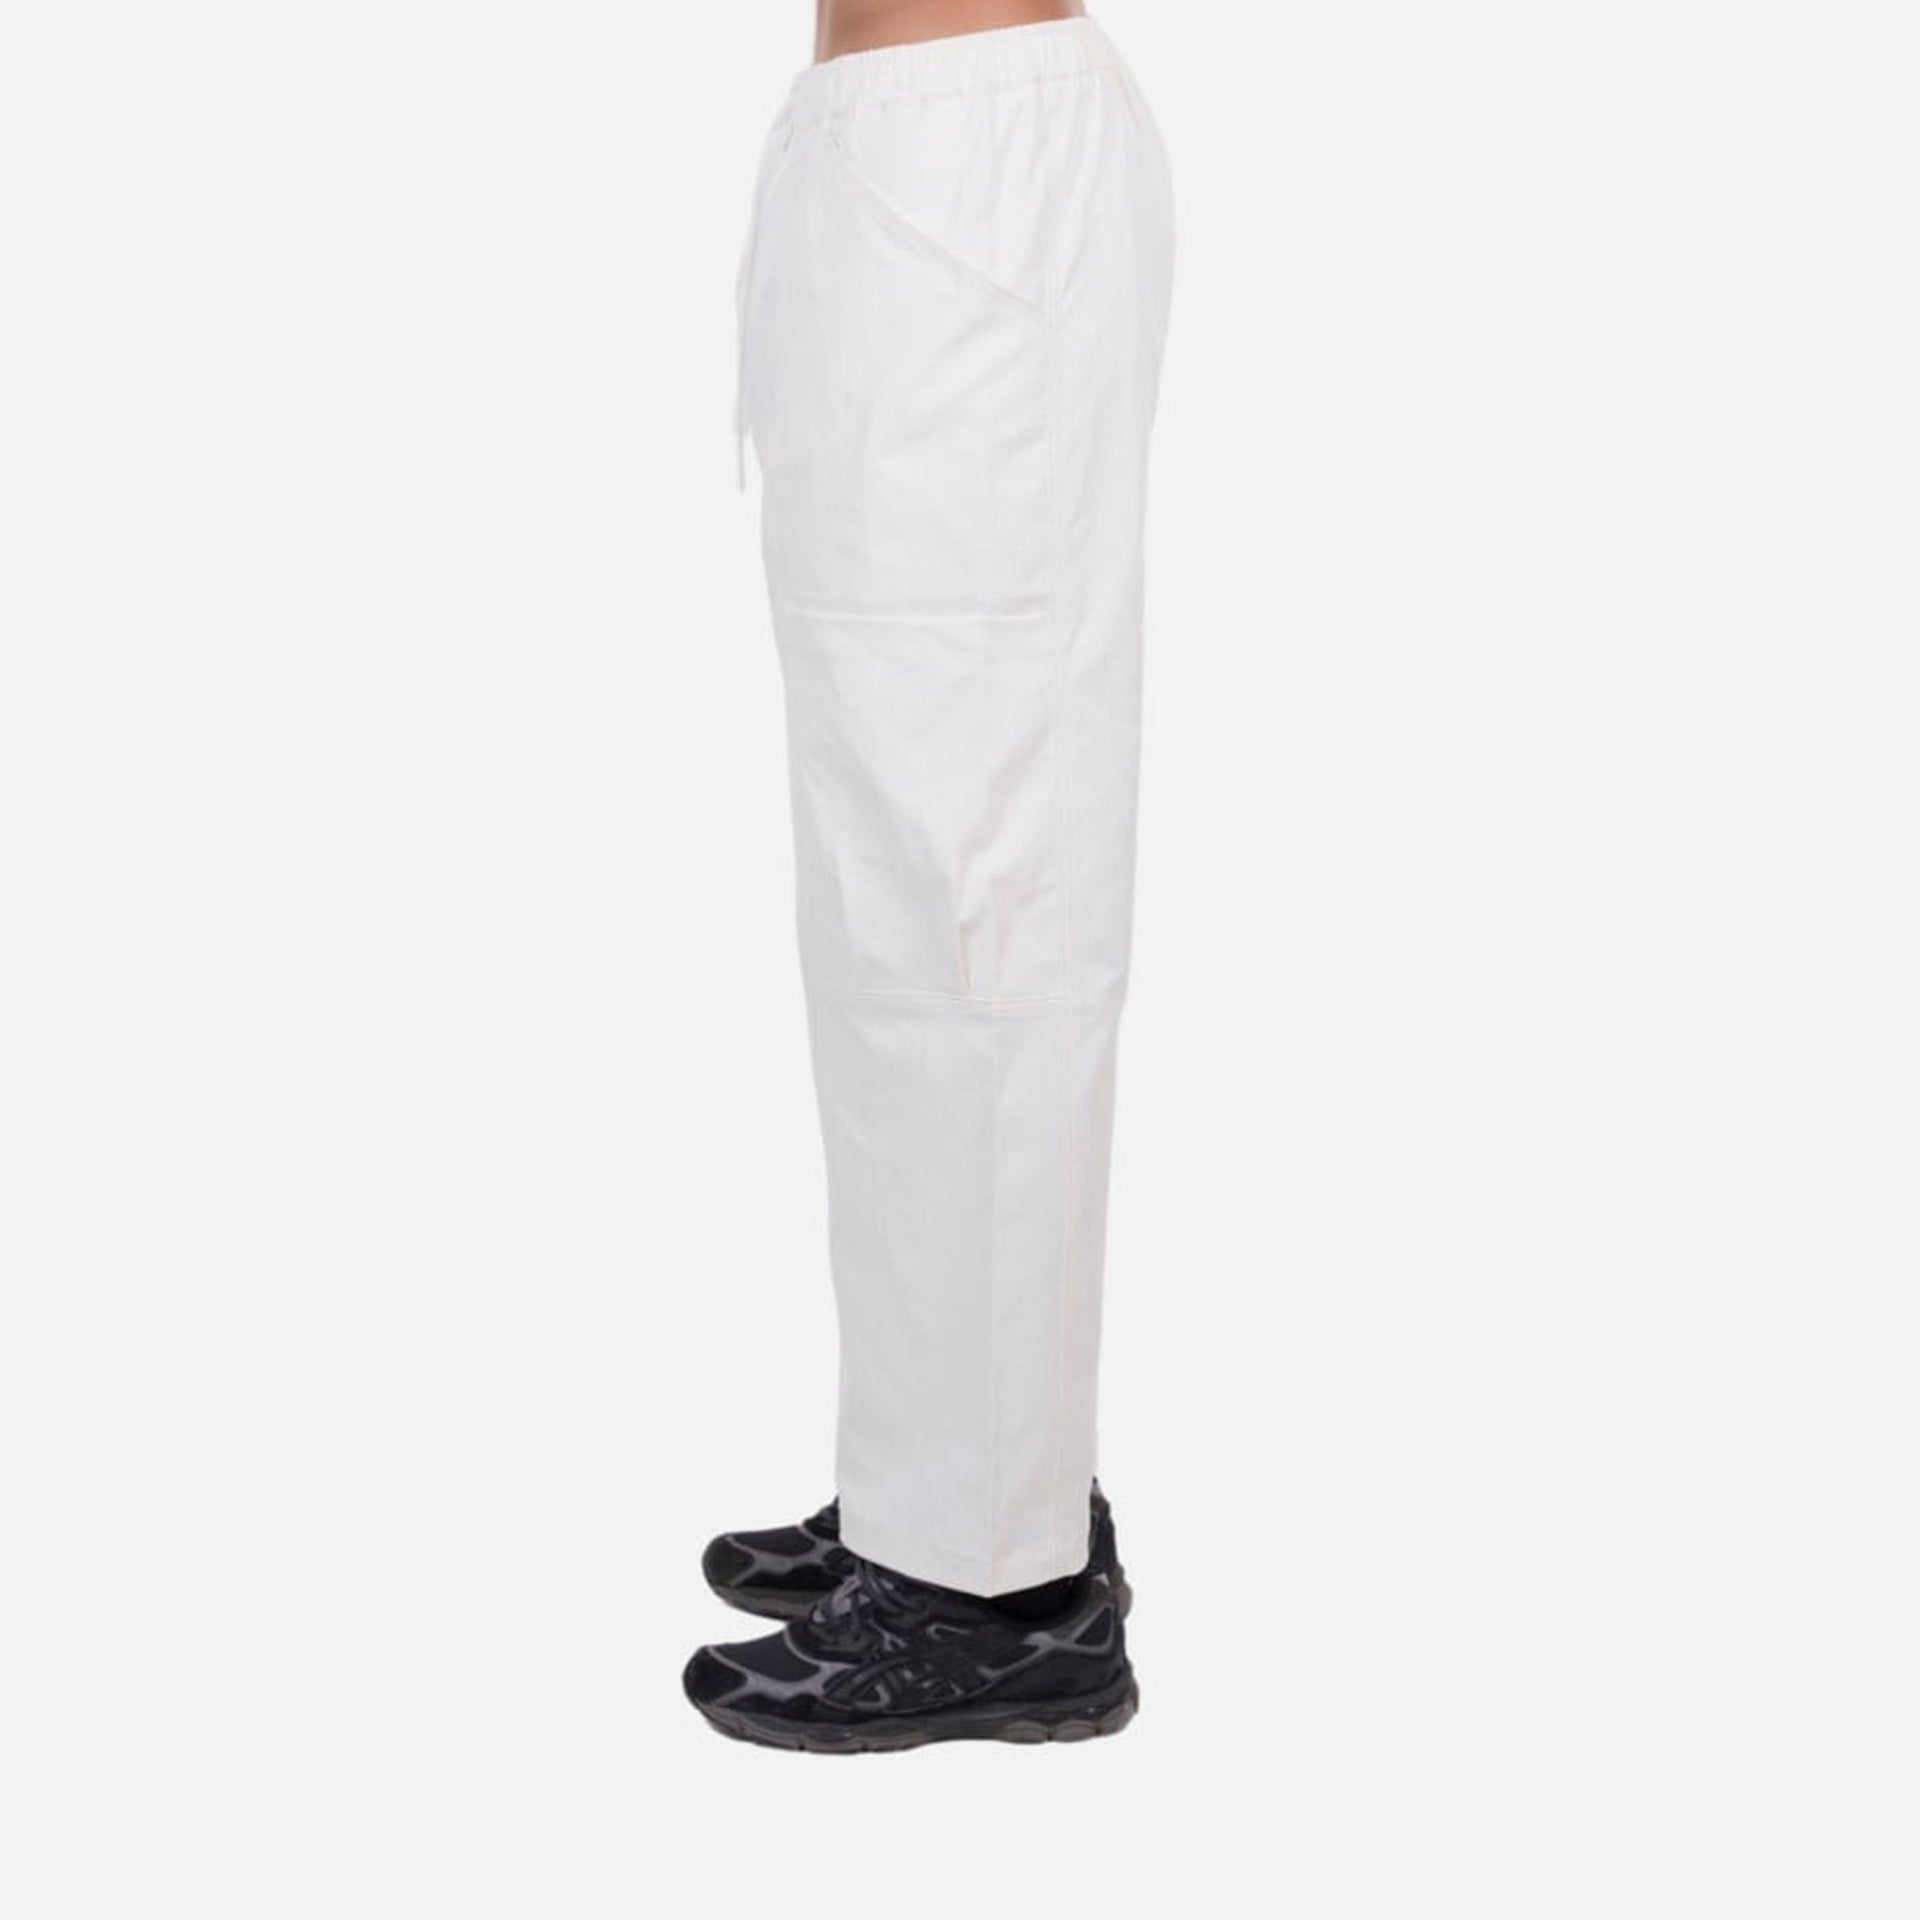 White Pants With Side Pockets By Dracaena Cinnabari